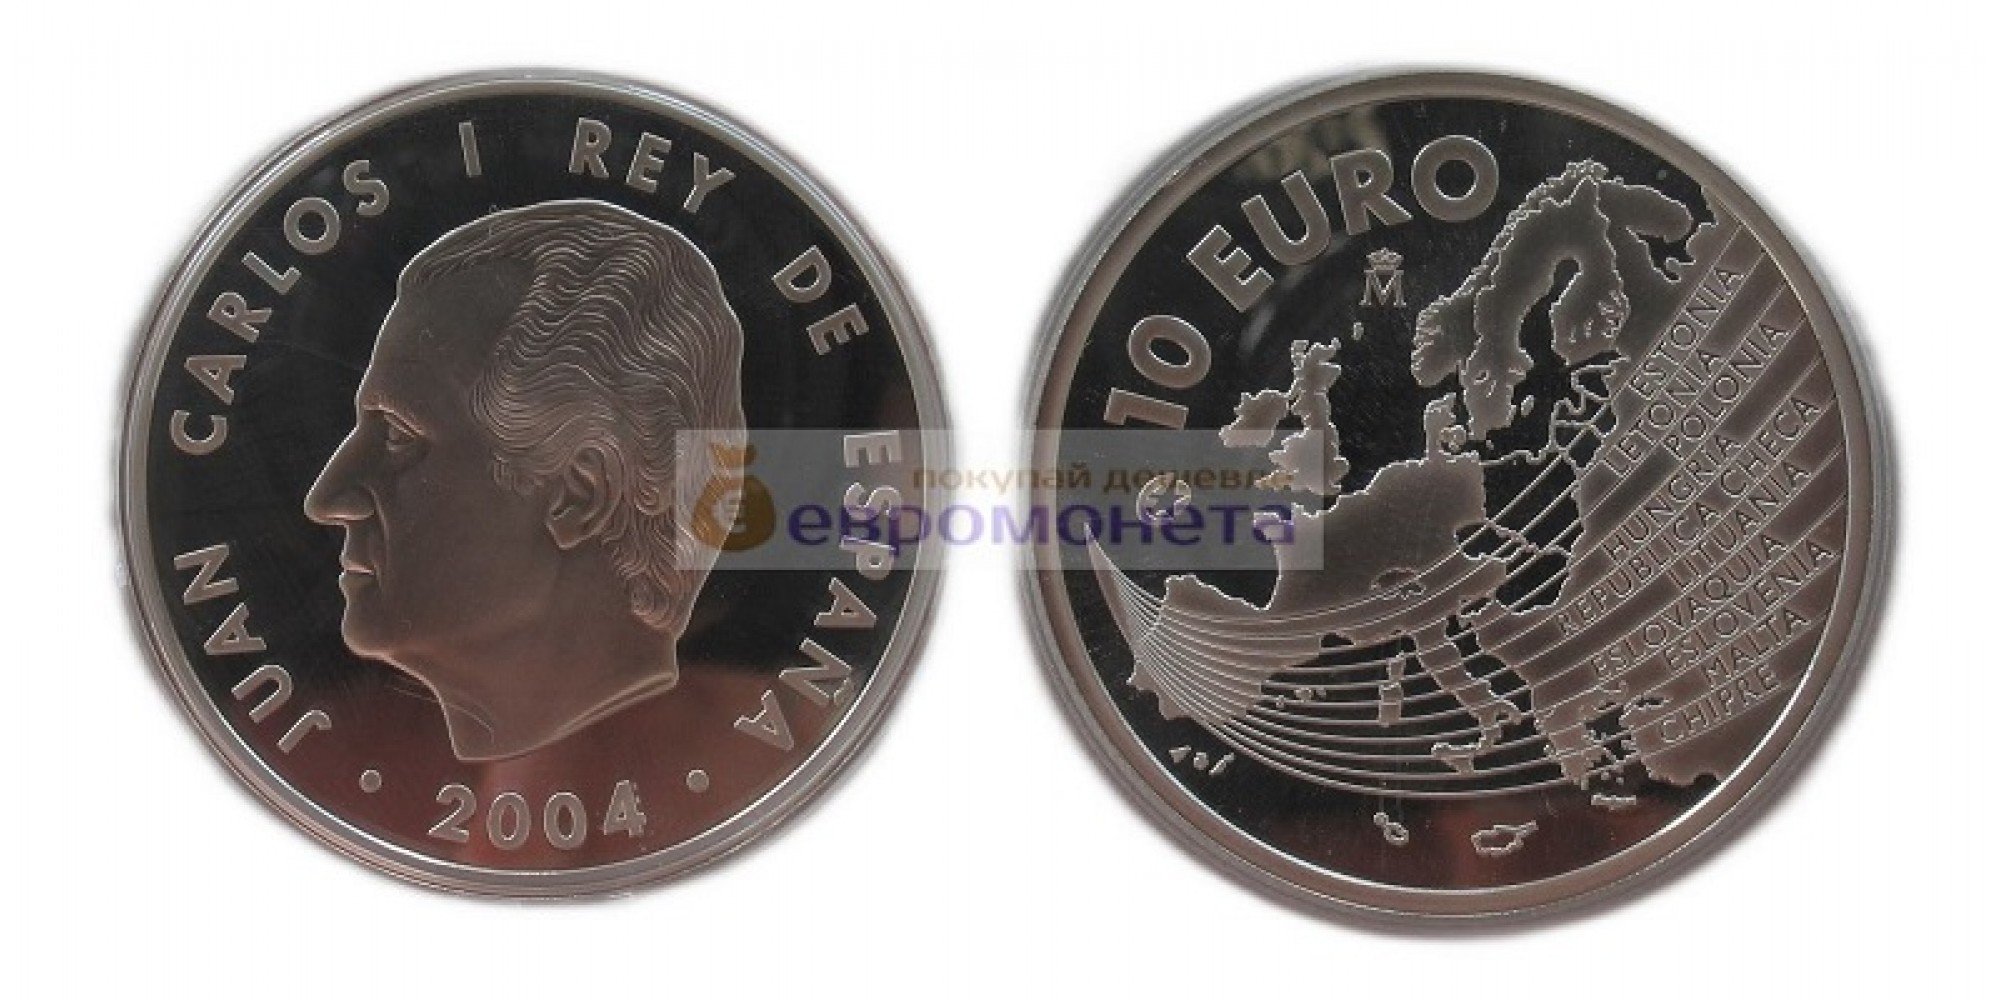 Испания 10 евро 2004 год. Расширение ЕС. Серебро. Пруф (Proof )